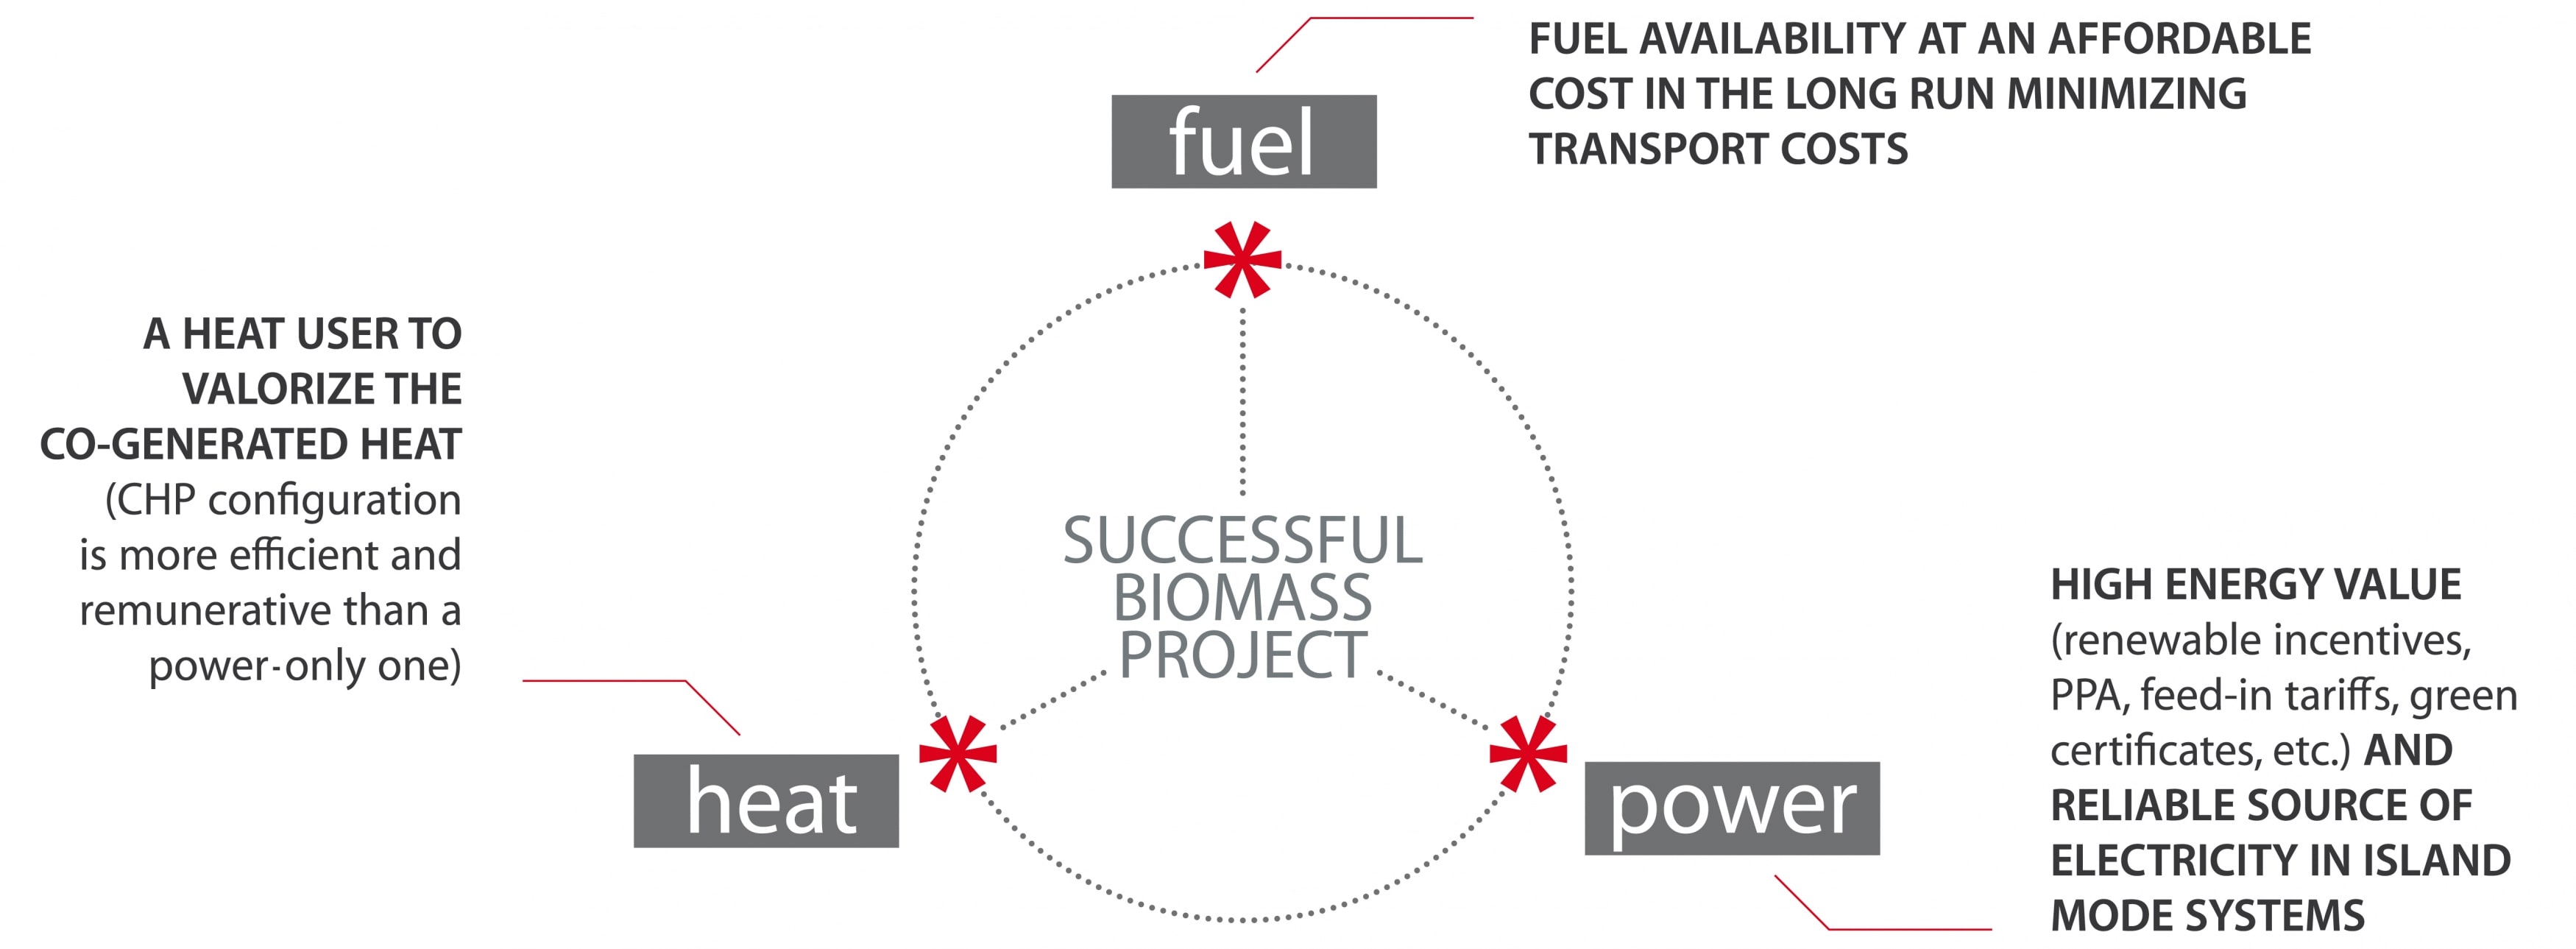 Successful biomass project